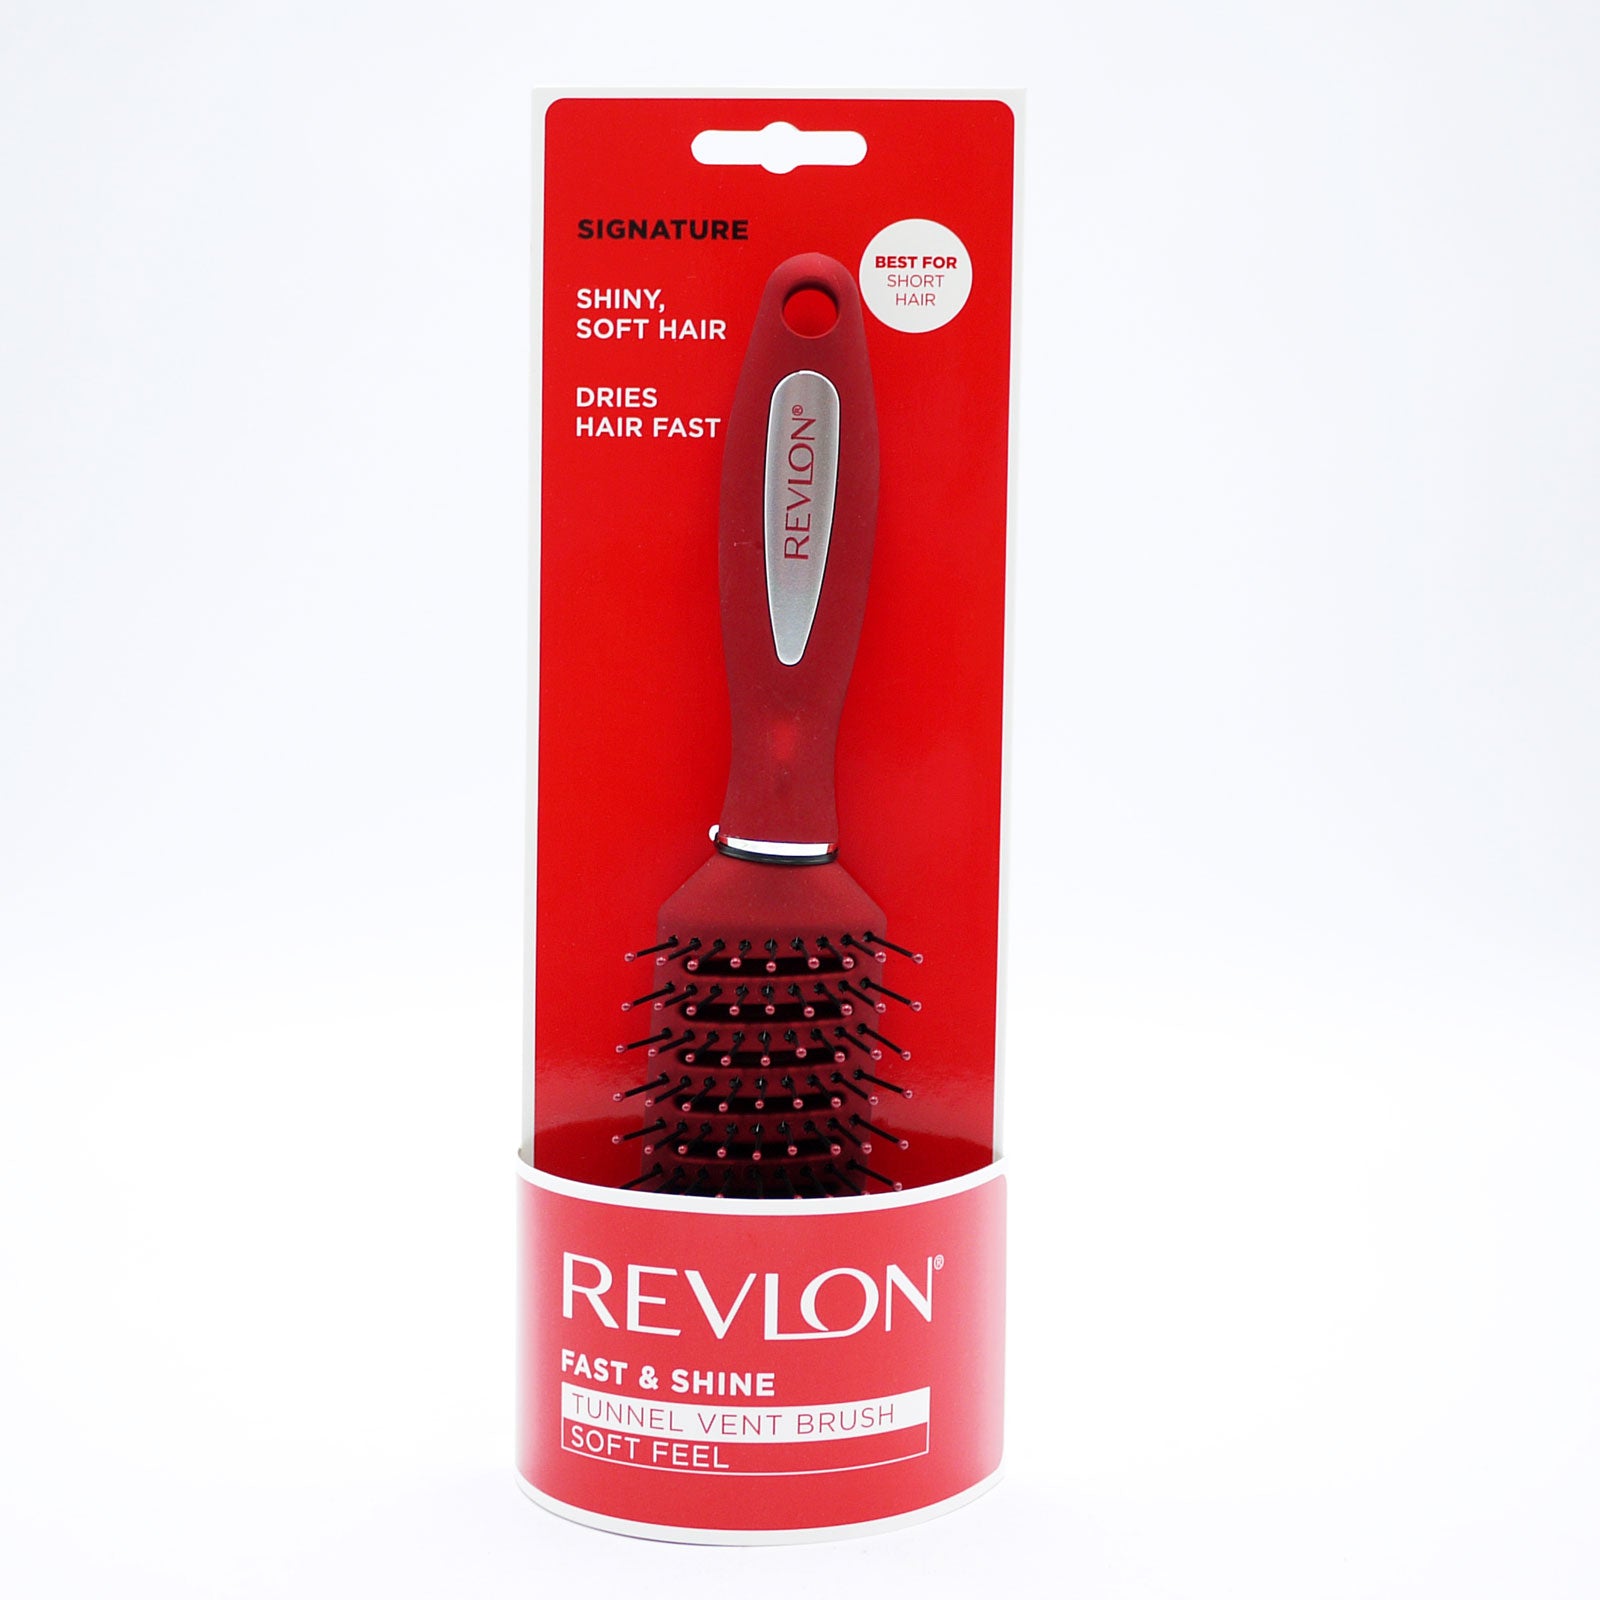 Revlon Signature Fast & Shine Tunnel Vent Brush Soft Feel